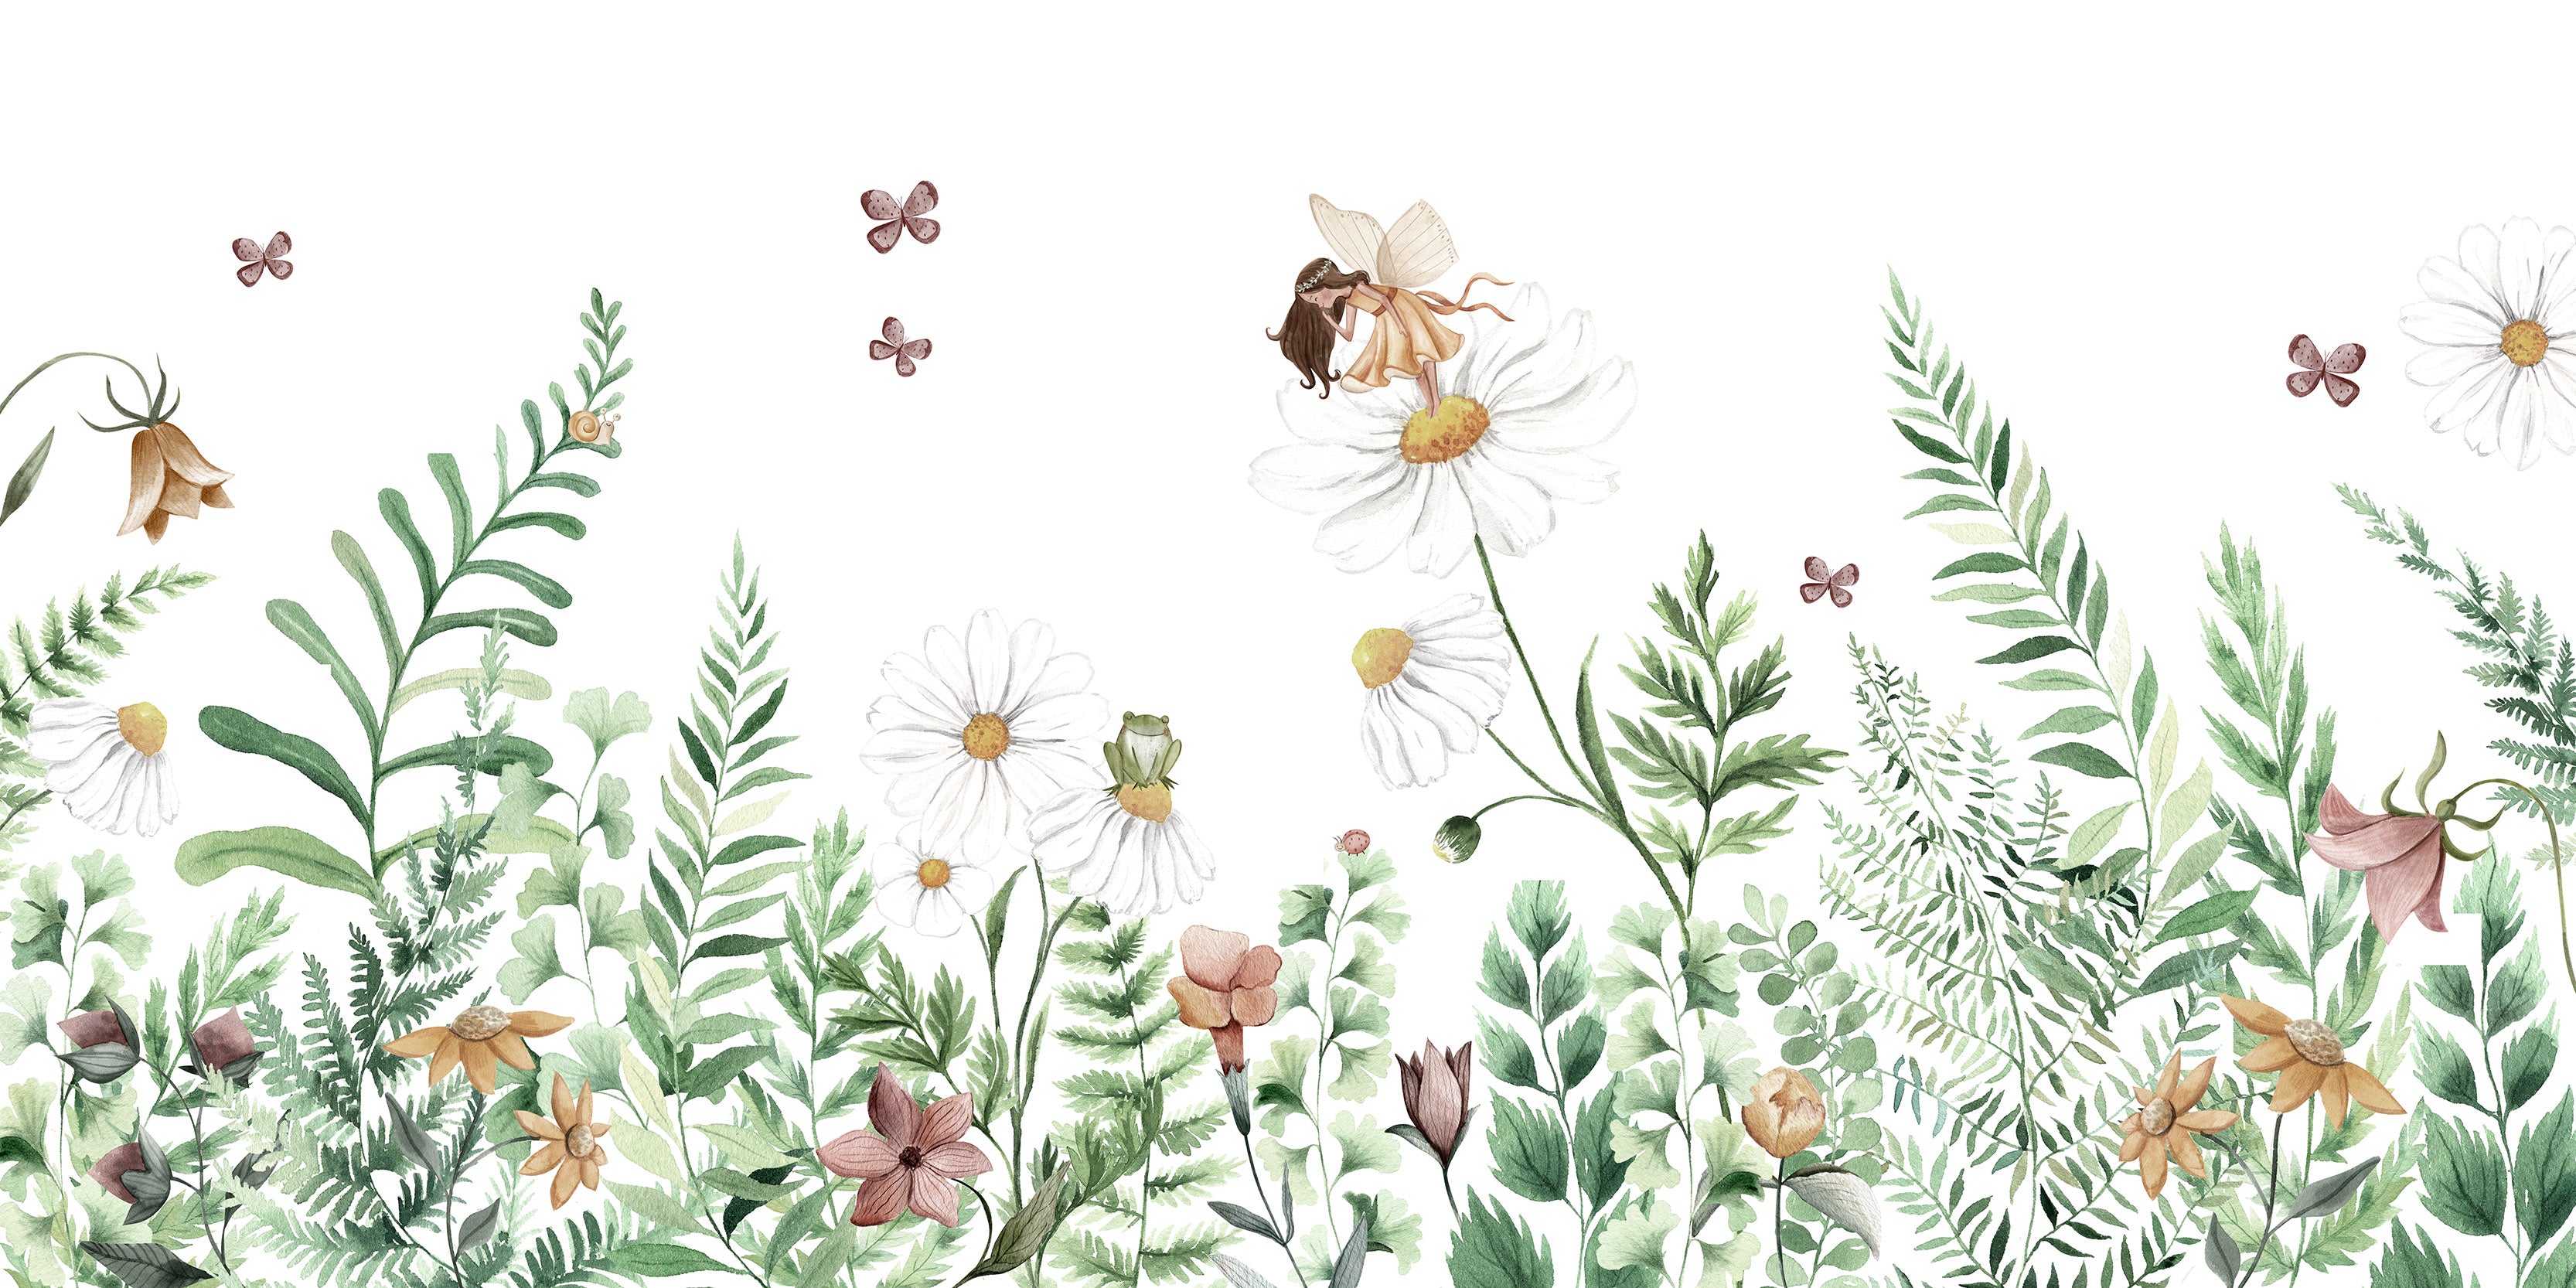 Fairy Garden - Magical Flowers and Fairies Watercolour Illustration Wallpaper Mural Full Artwork